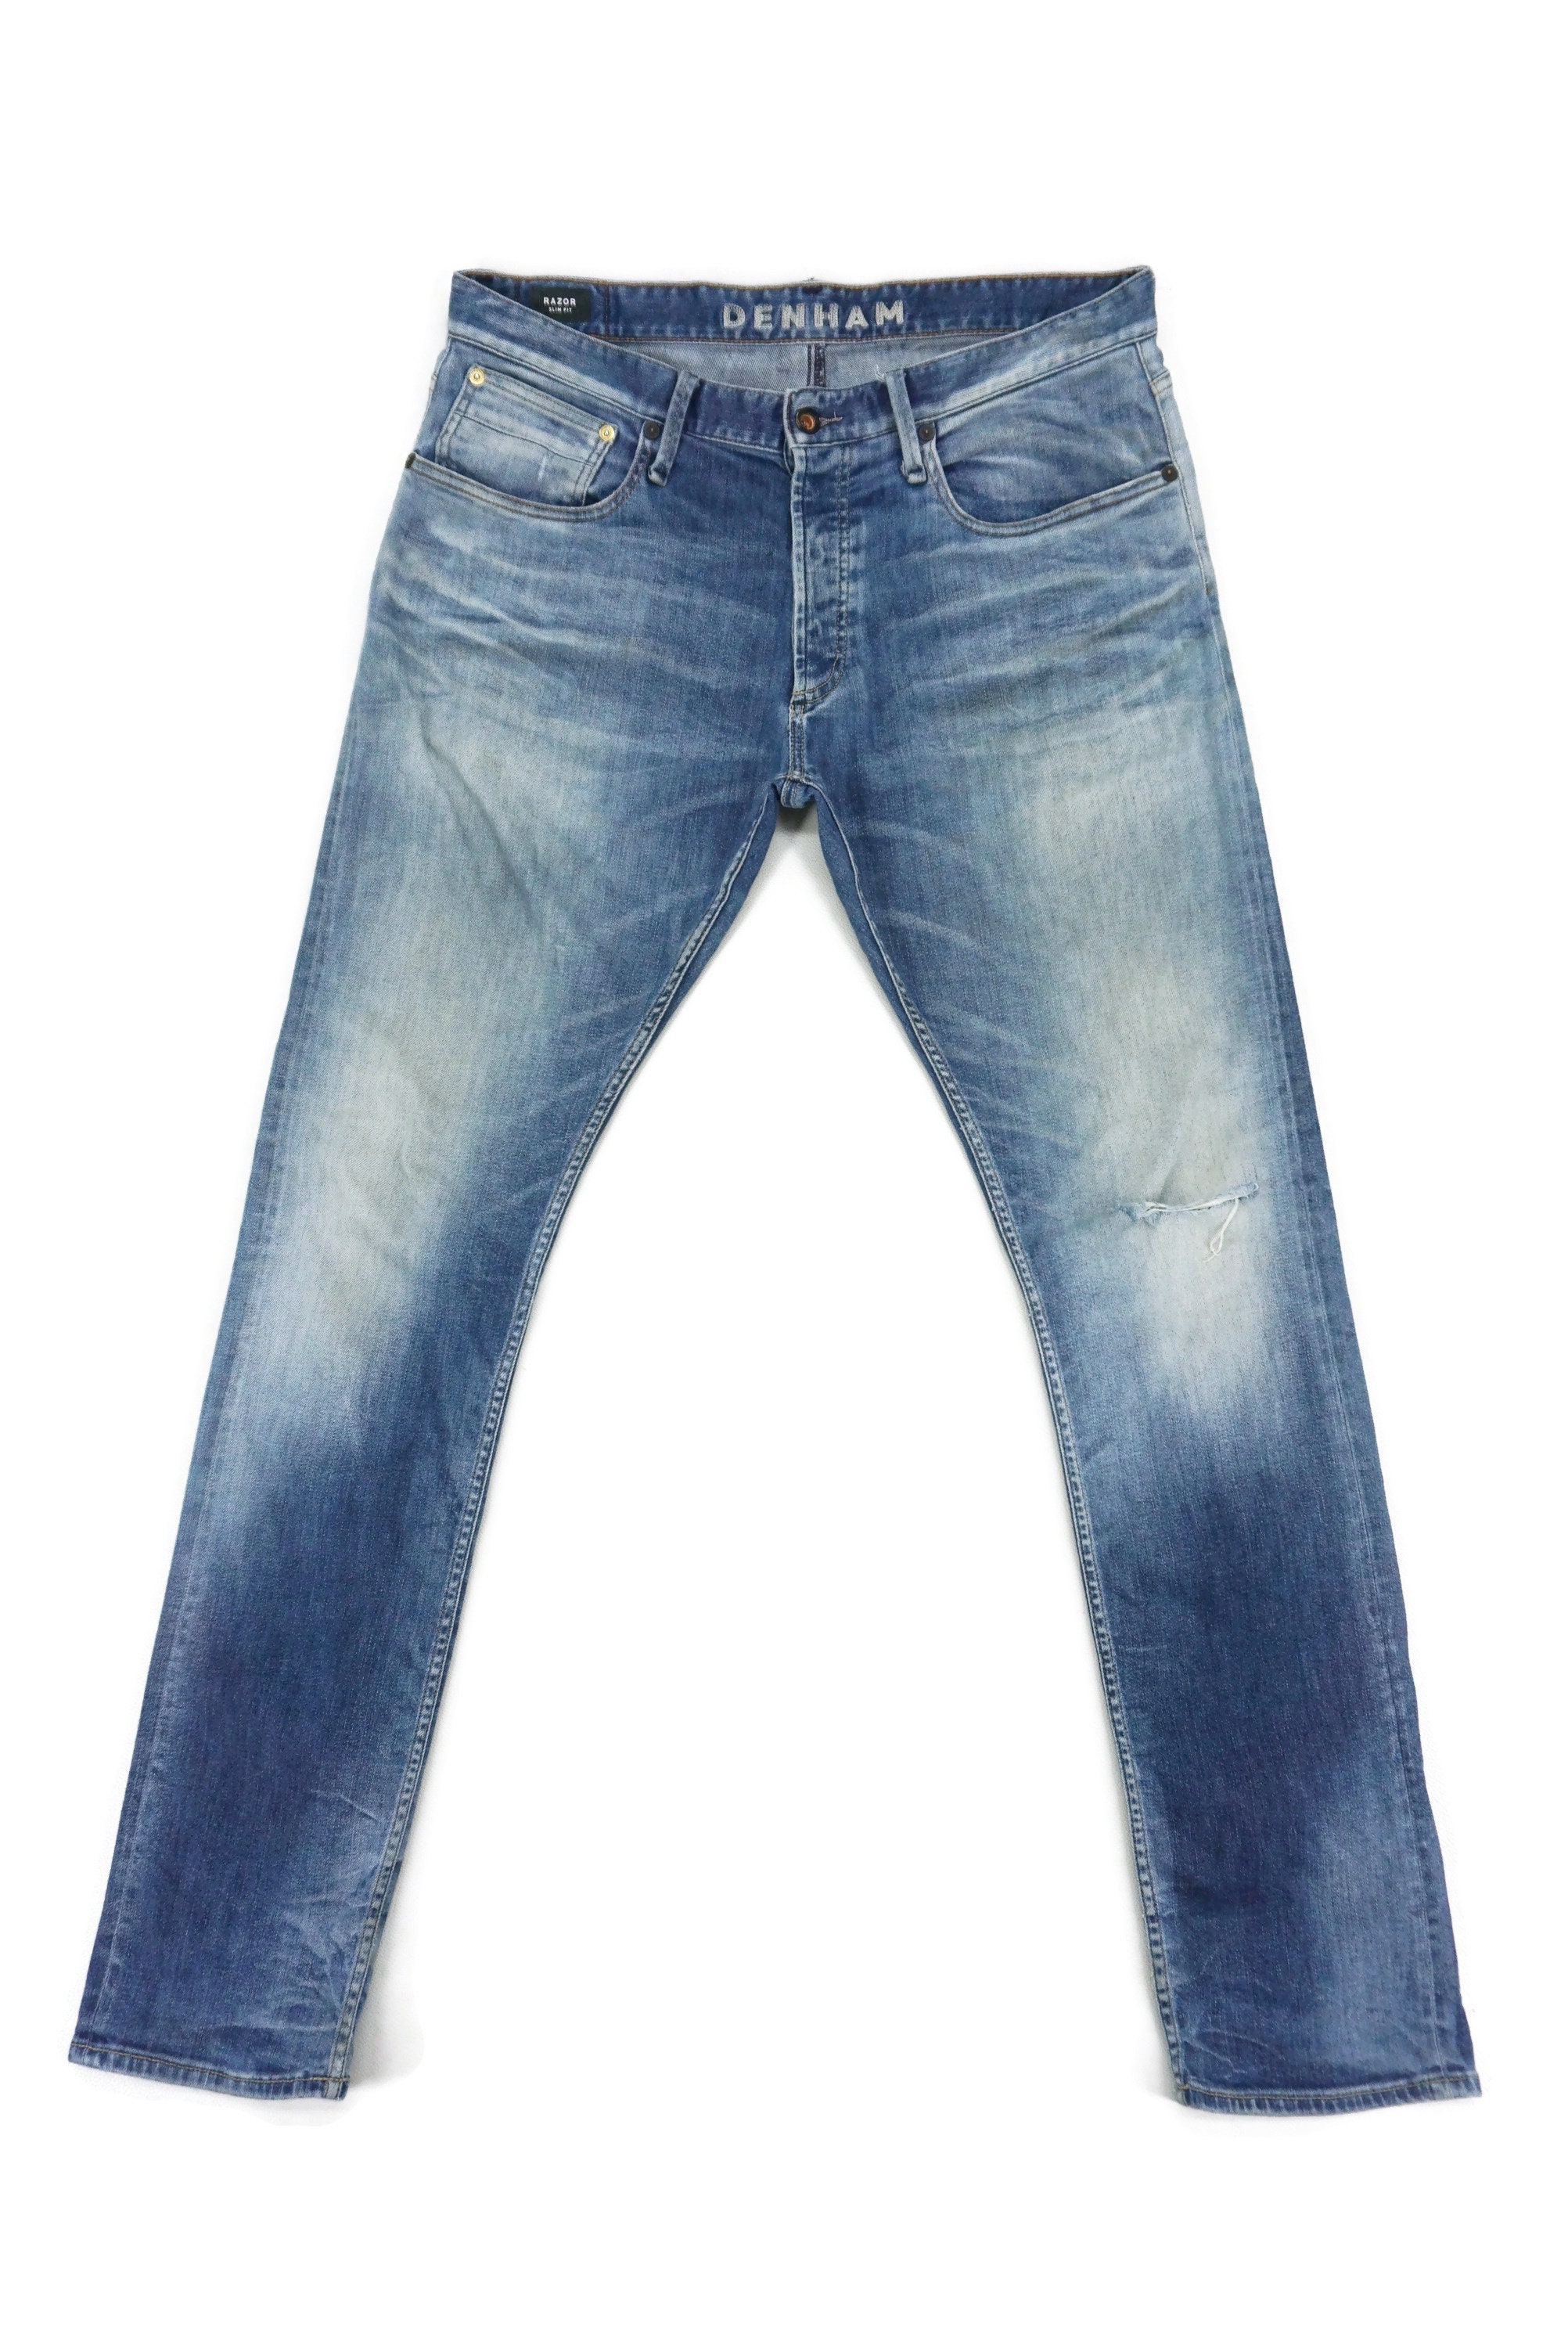 DENHAM Selvedge Jeans Size 36 W36xl34 Denham Razor Denim Jeans - Etsy